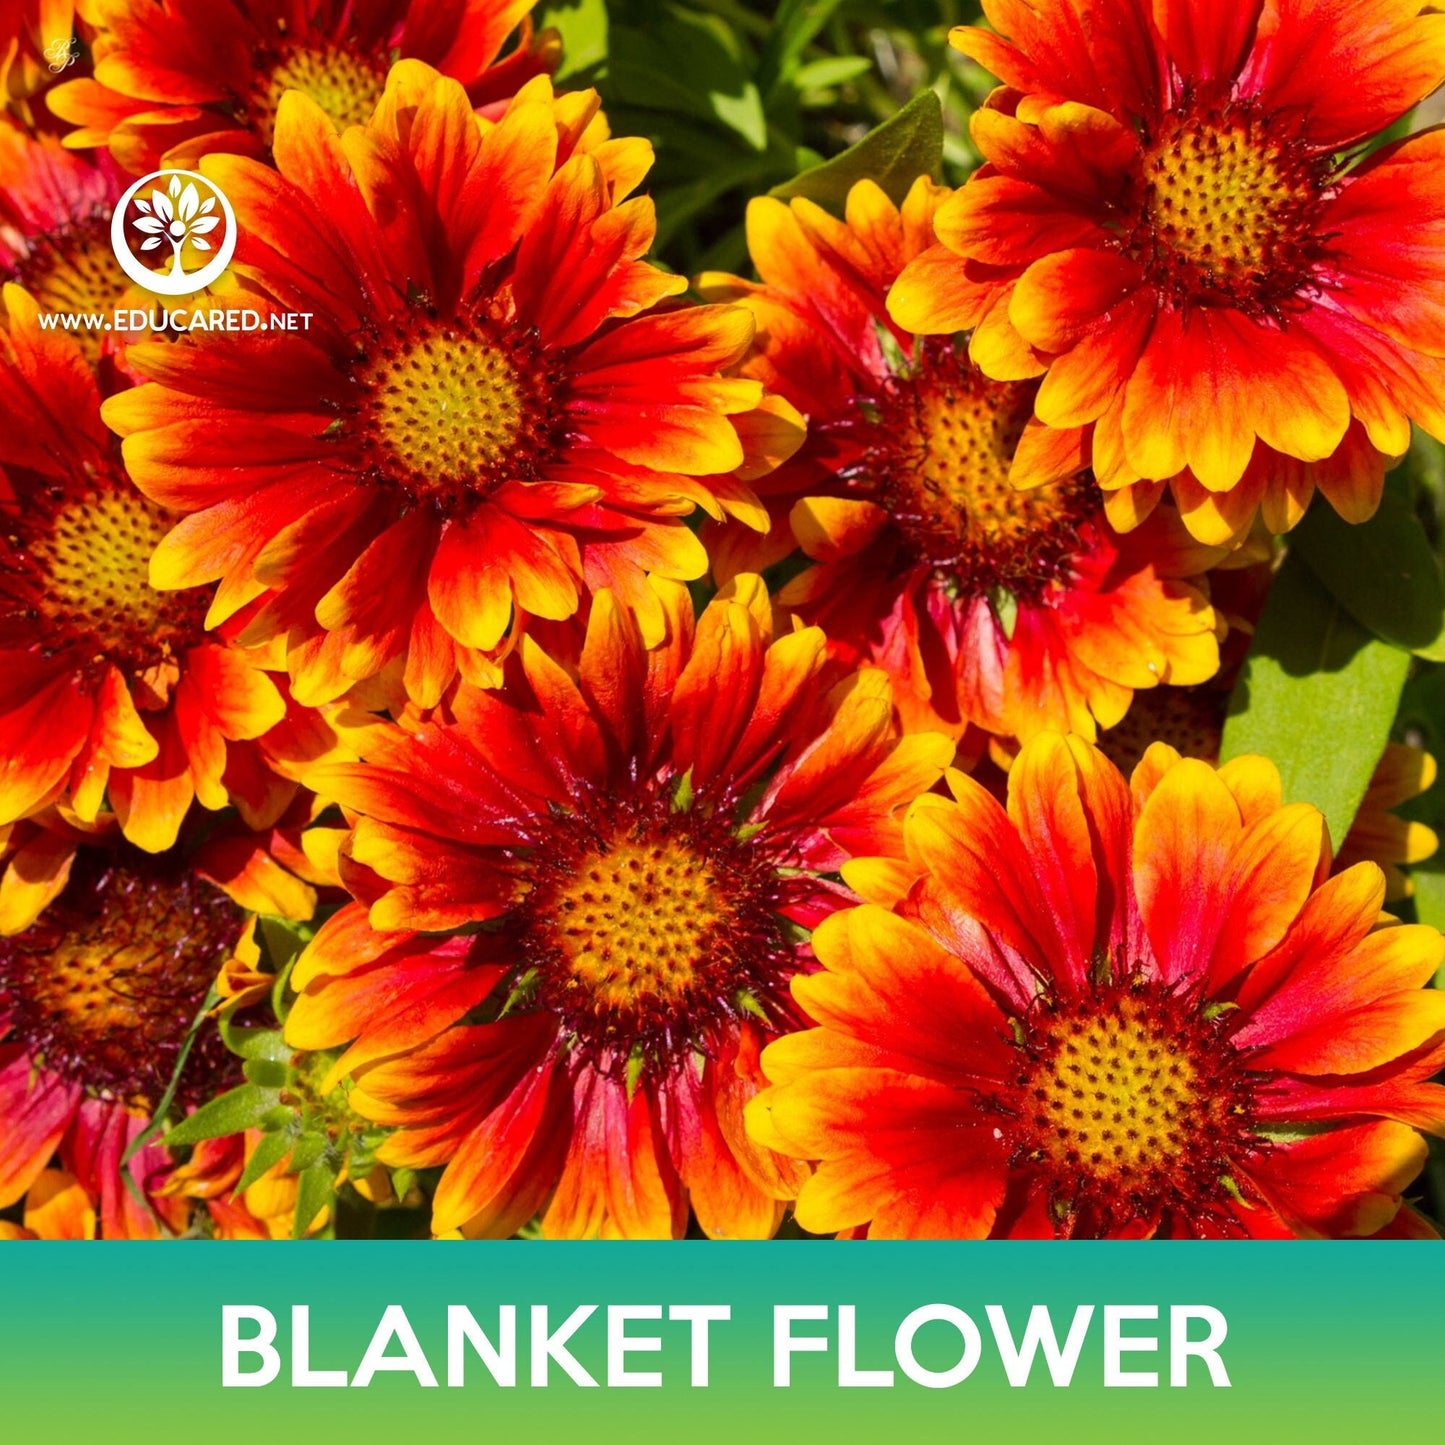 Blanket Flower Seeds, Gaillardia aristata